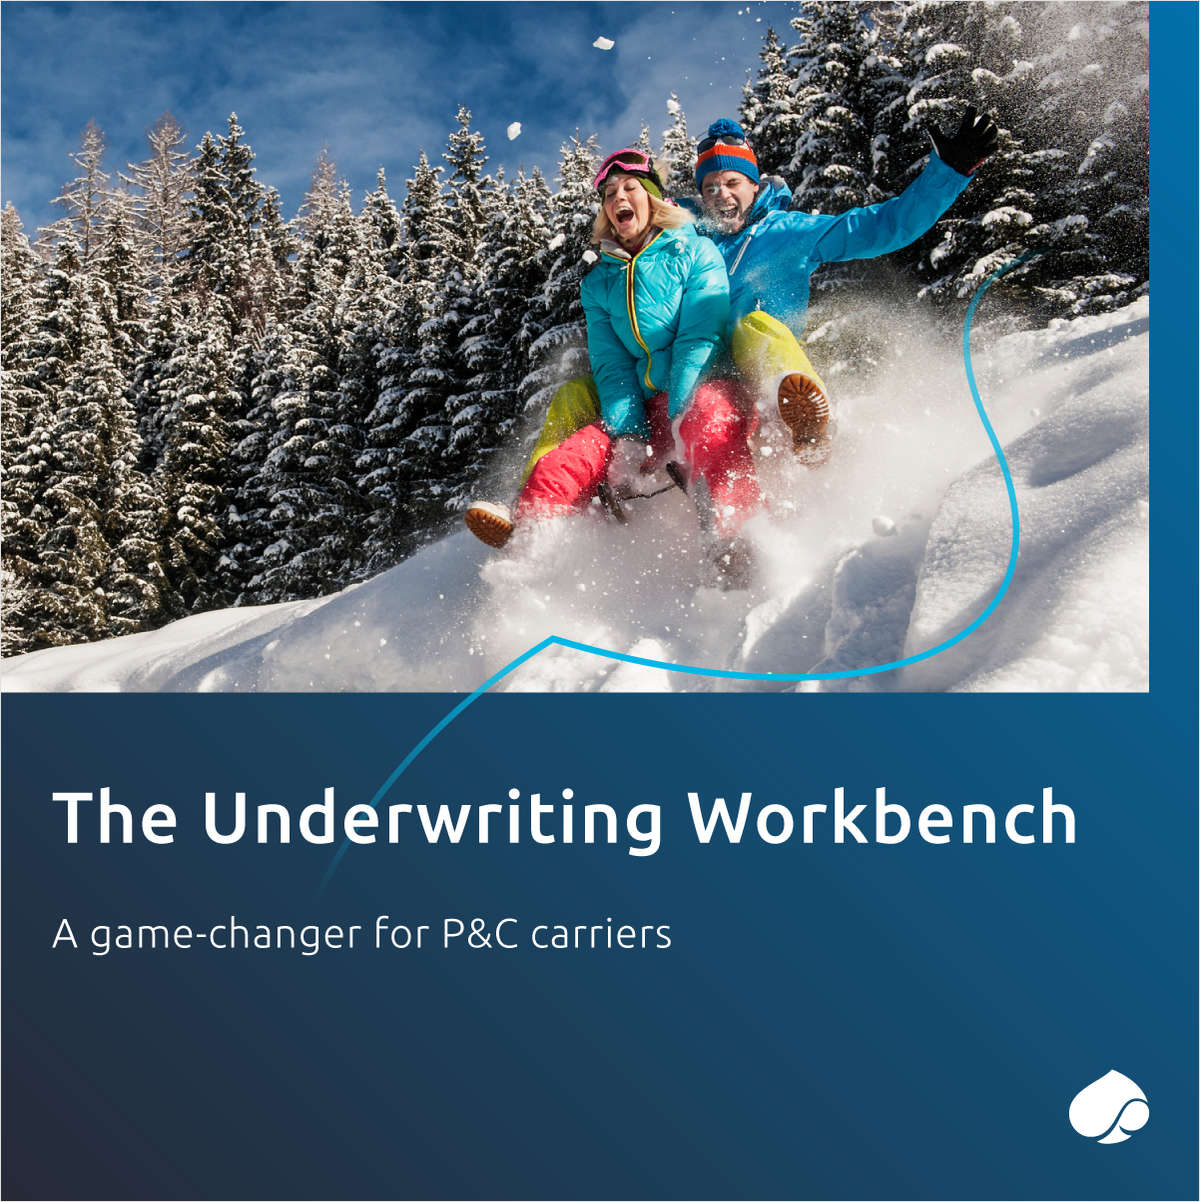 Modernize P&C underwriting